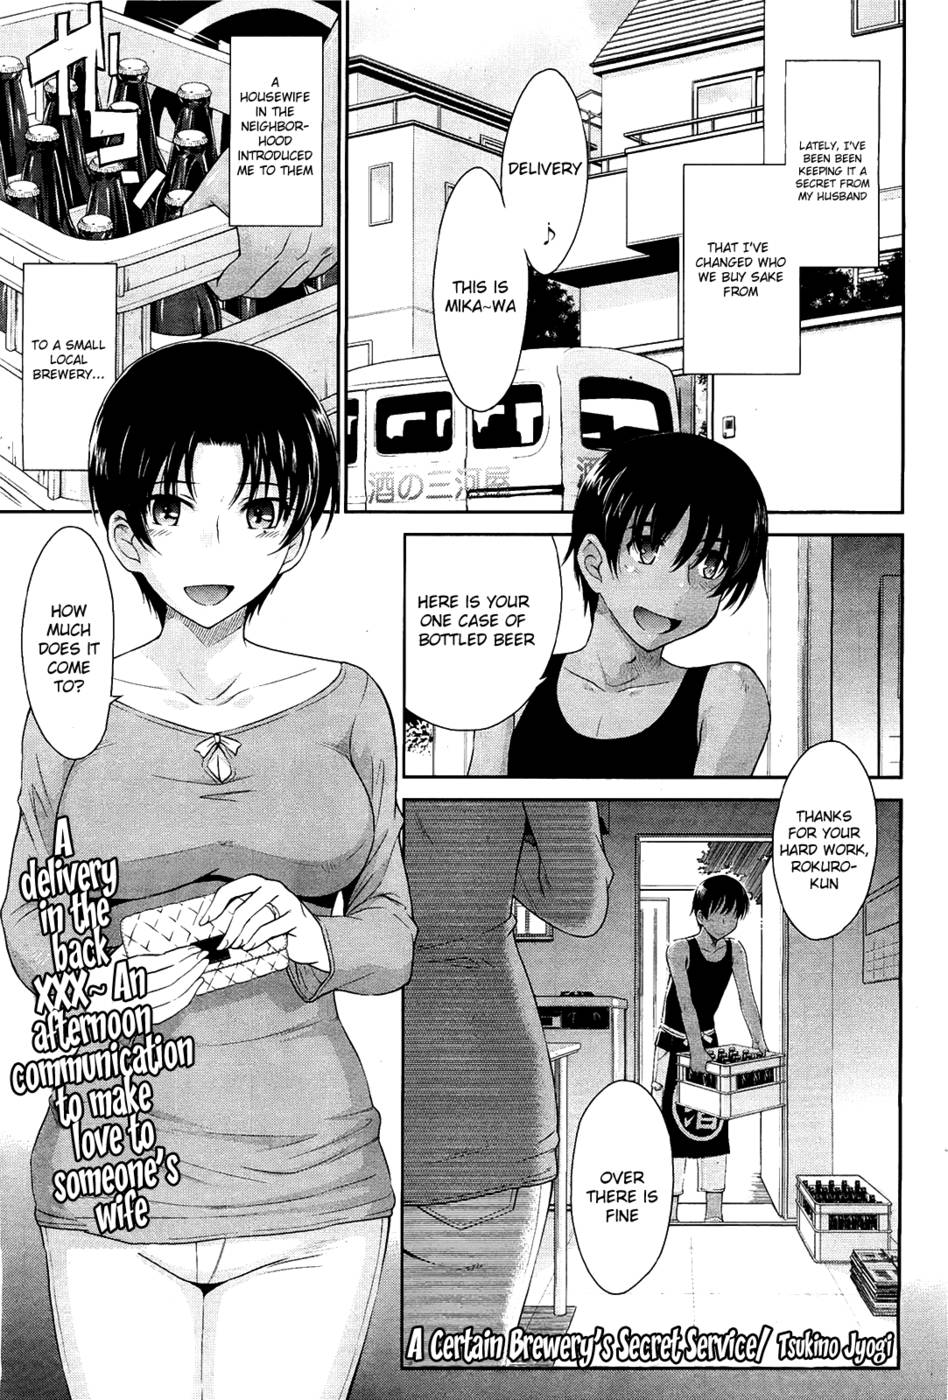 Hentai Manga Comic-A Certain Brewery's Secret Service-Read-1